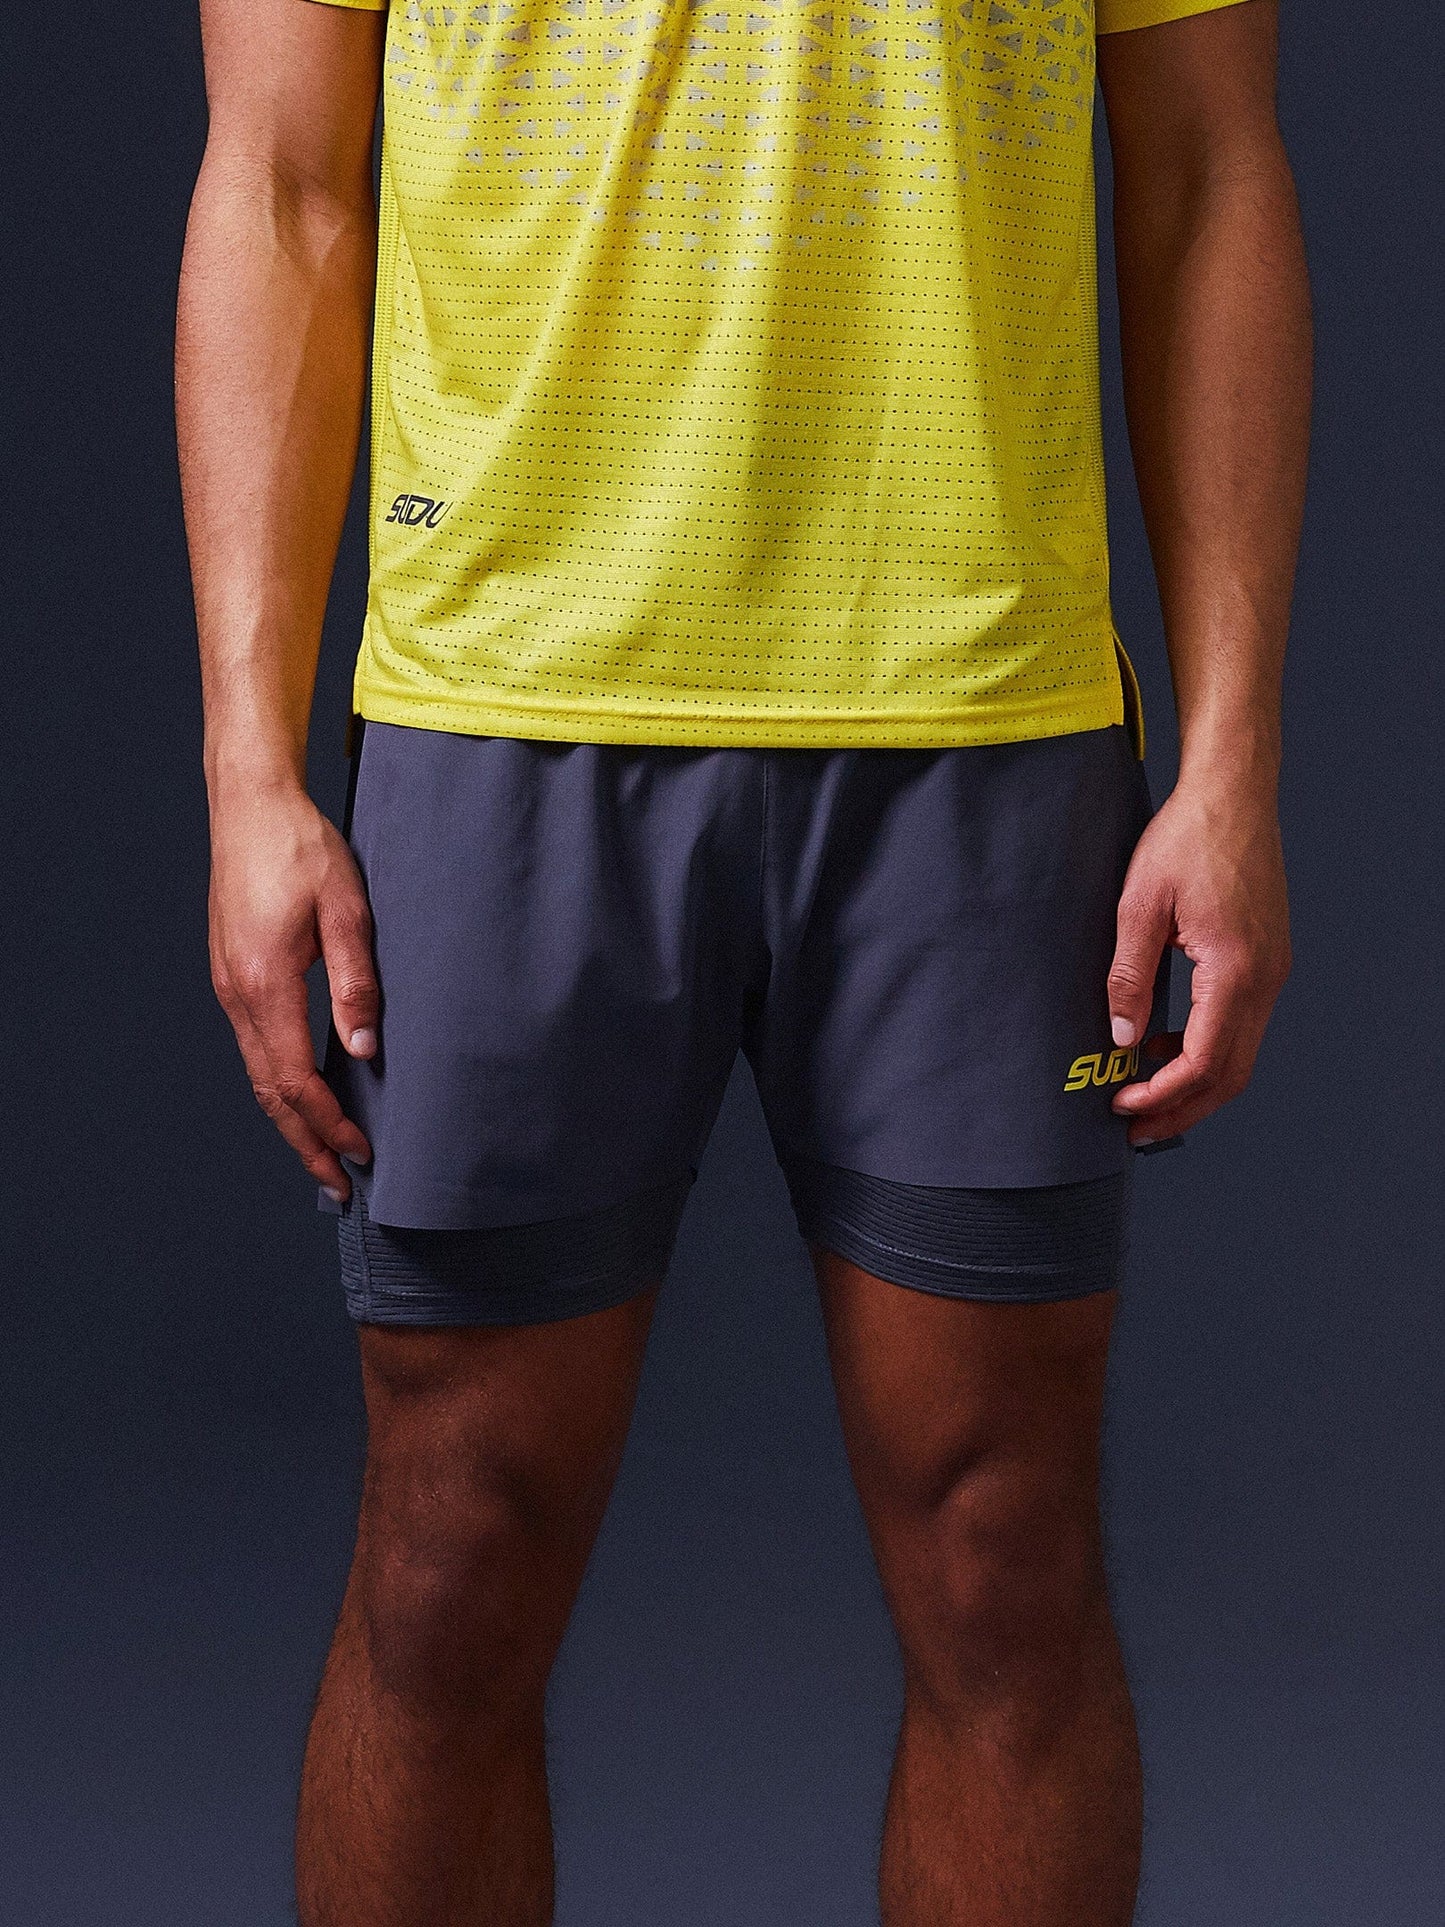 SUDU SRS 01 Run Shorts - Grey/Yellow Shorts